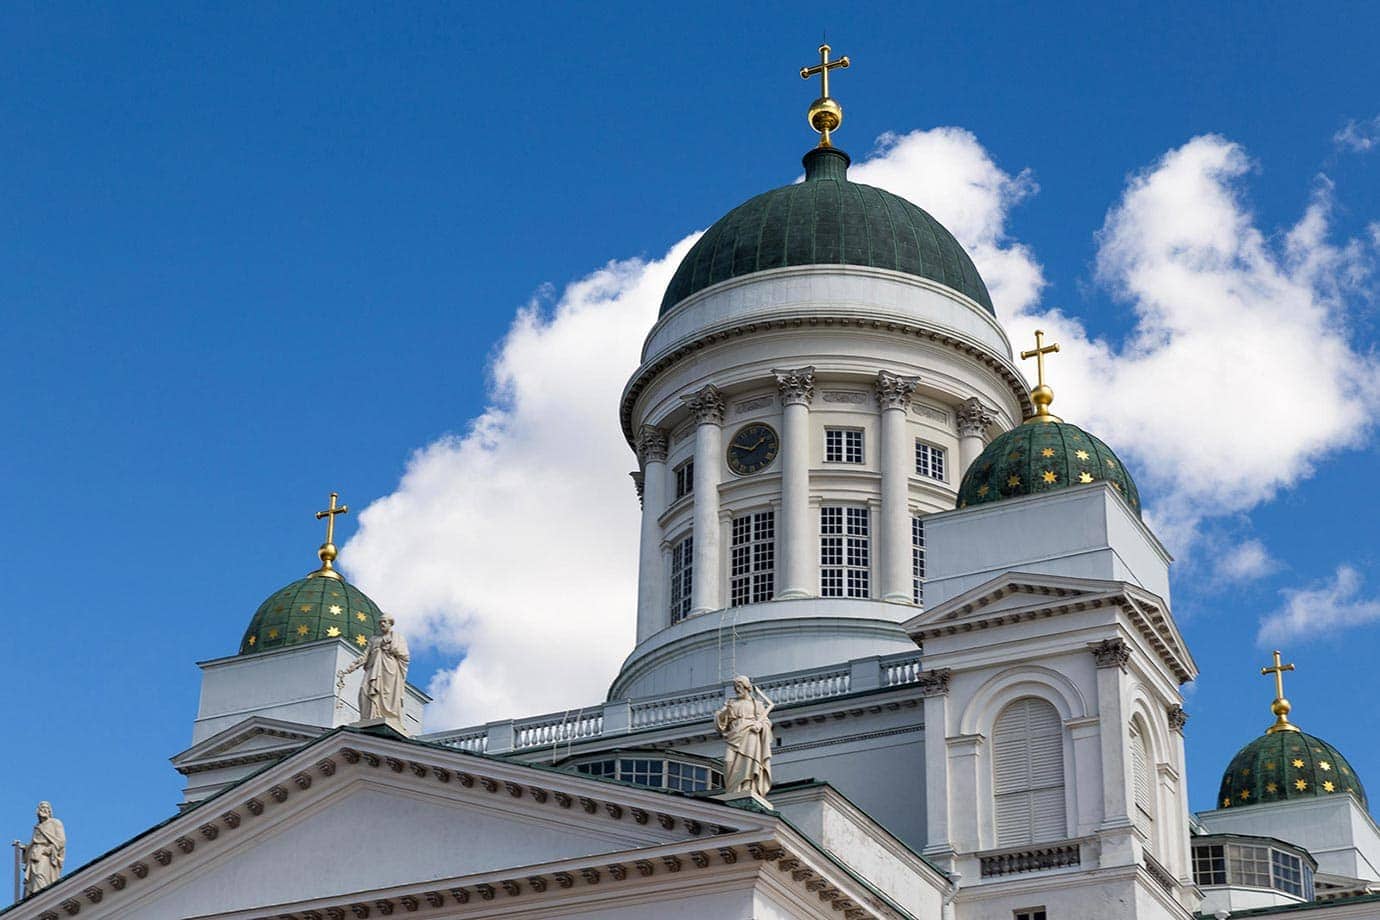 18 Things You’ve Got to do in Helsinki